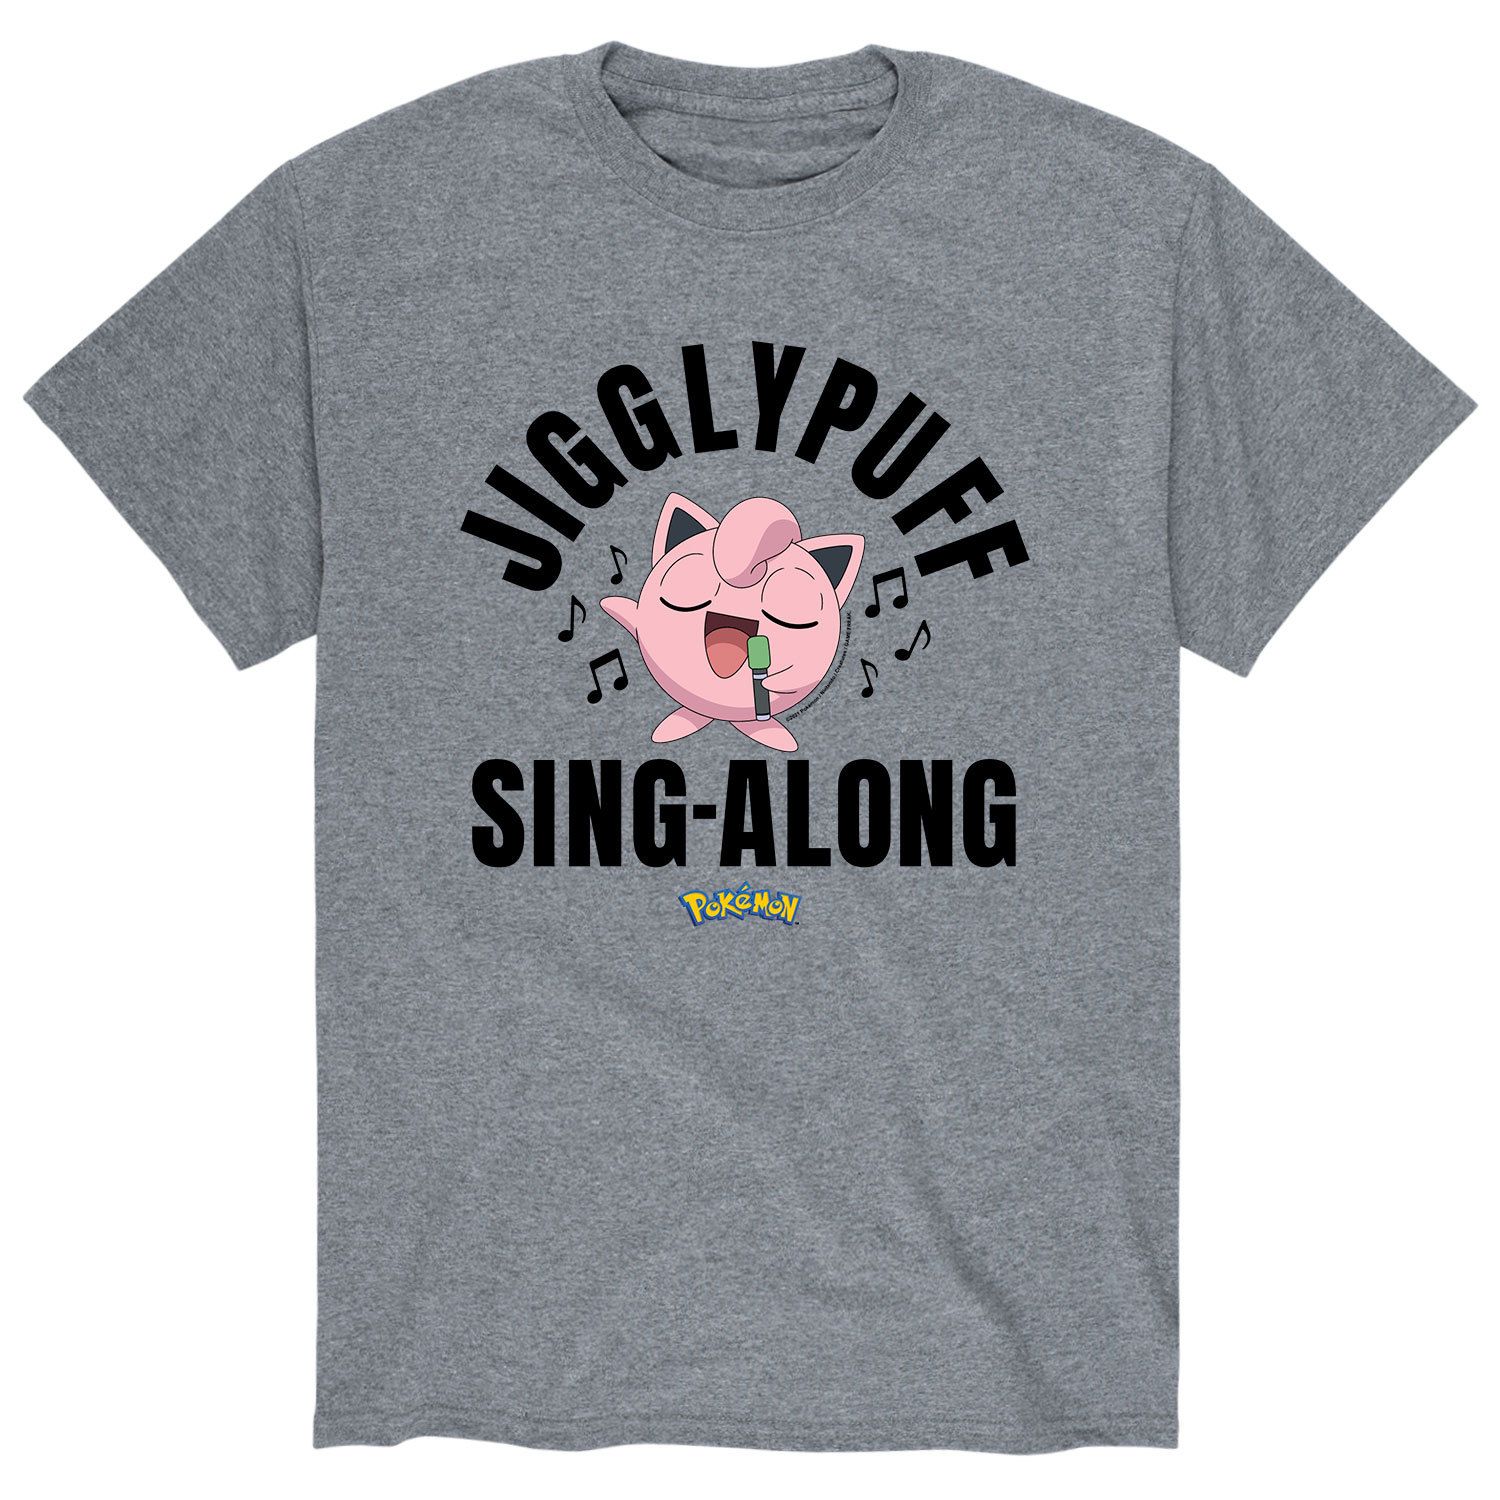 Мужская футболка с надписью Pokémon Jigglypuff Sing-Along Licensed Character набор pokemon фигурка lapras футболка jigglypuff sing l